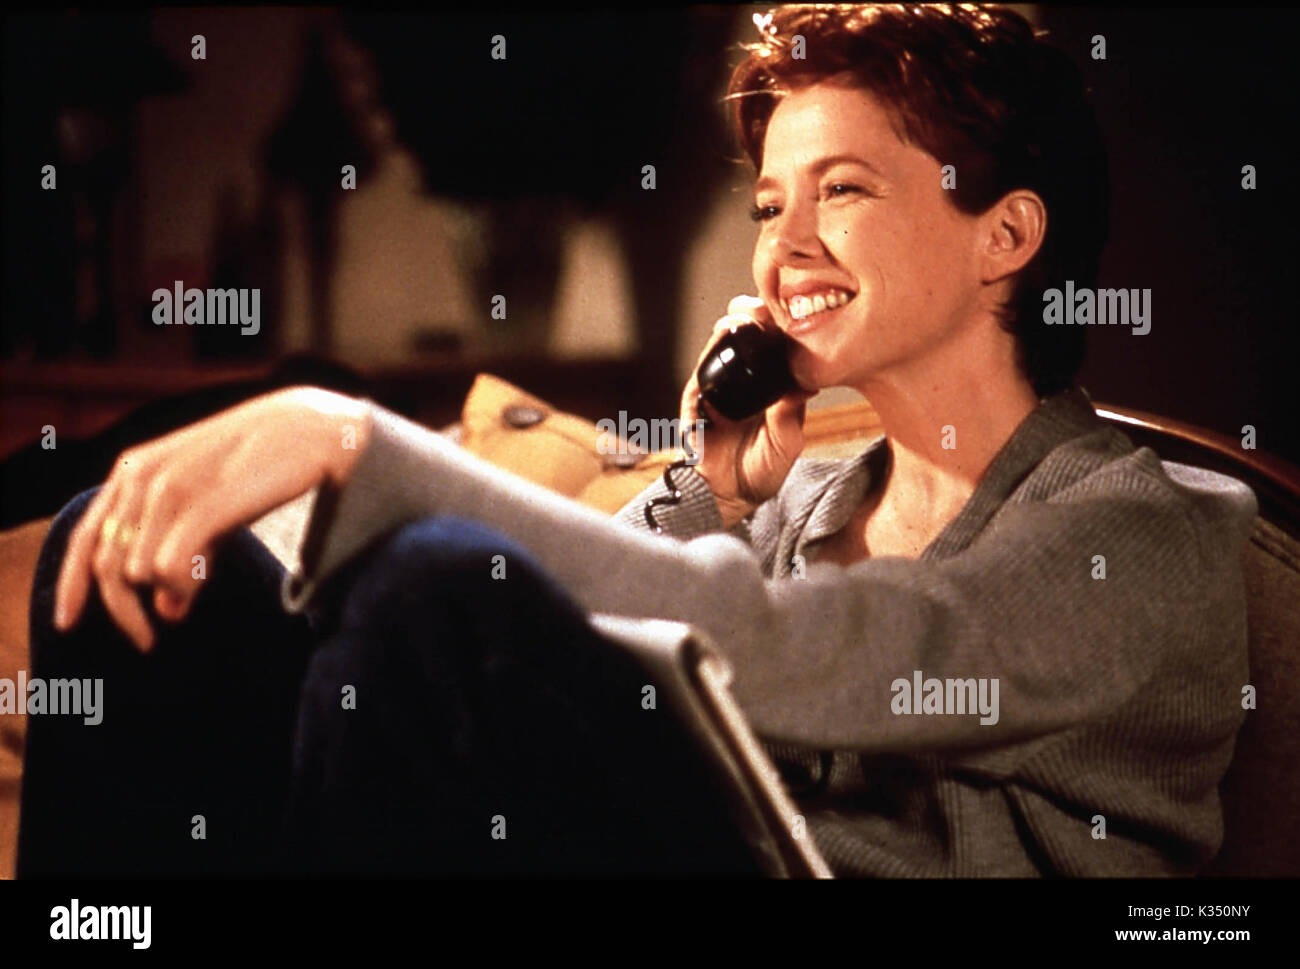 El presidente estadounidense Annette Bening Fecha: 1995 Foto de stock